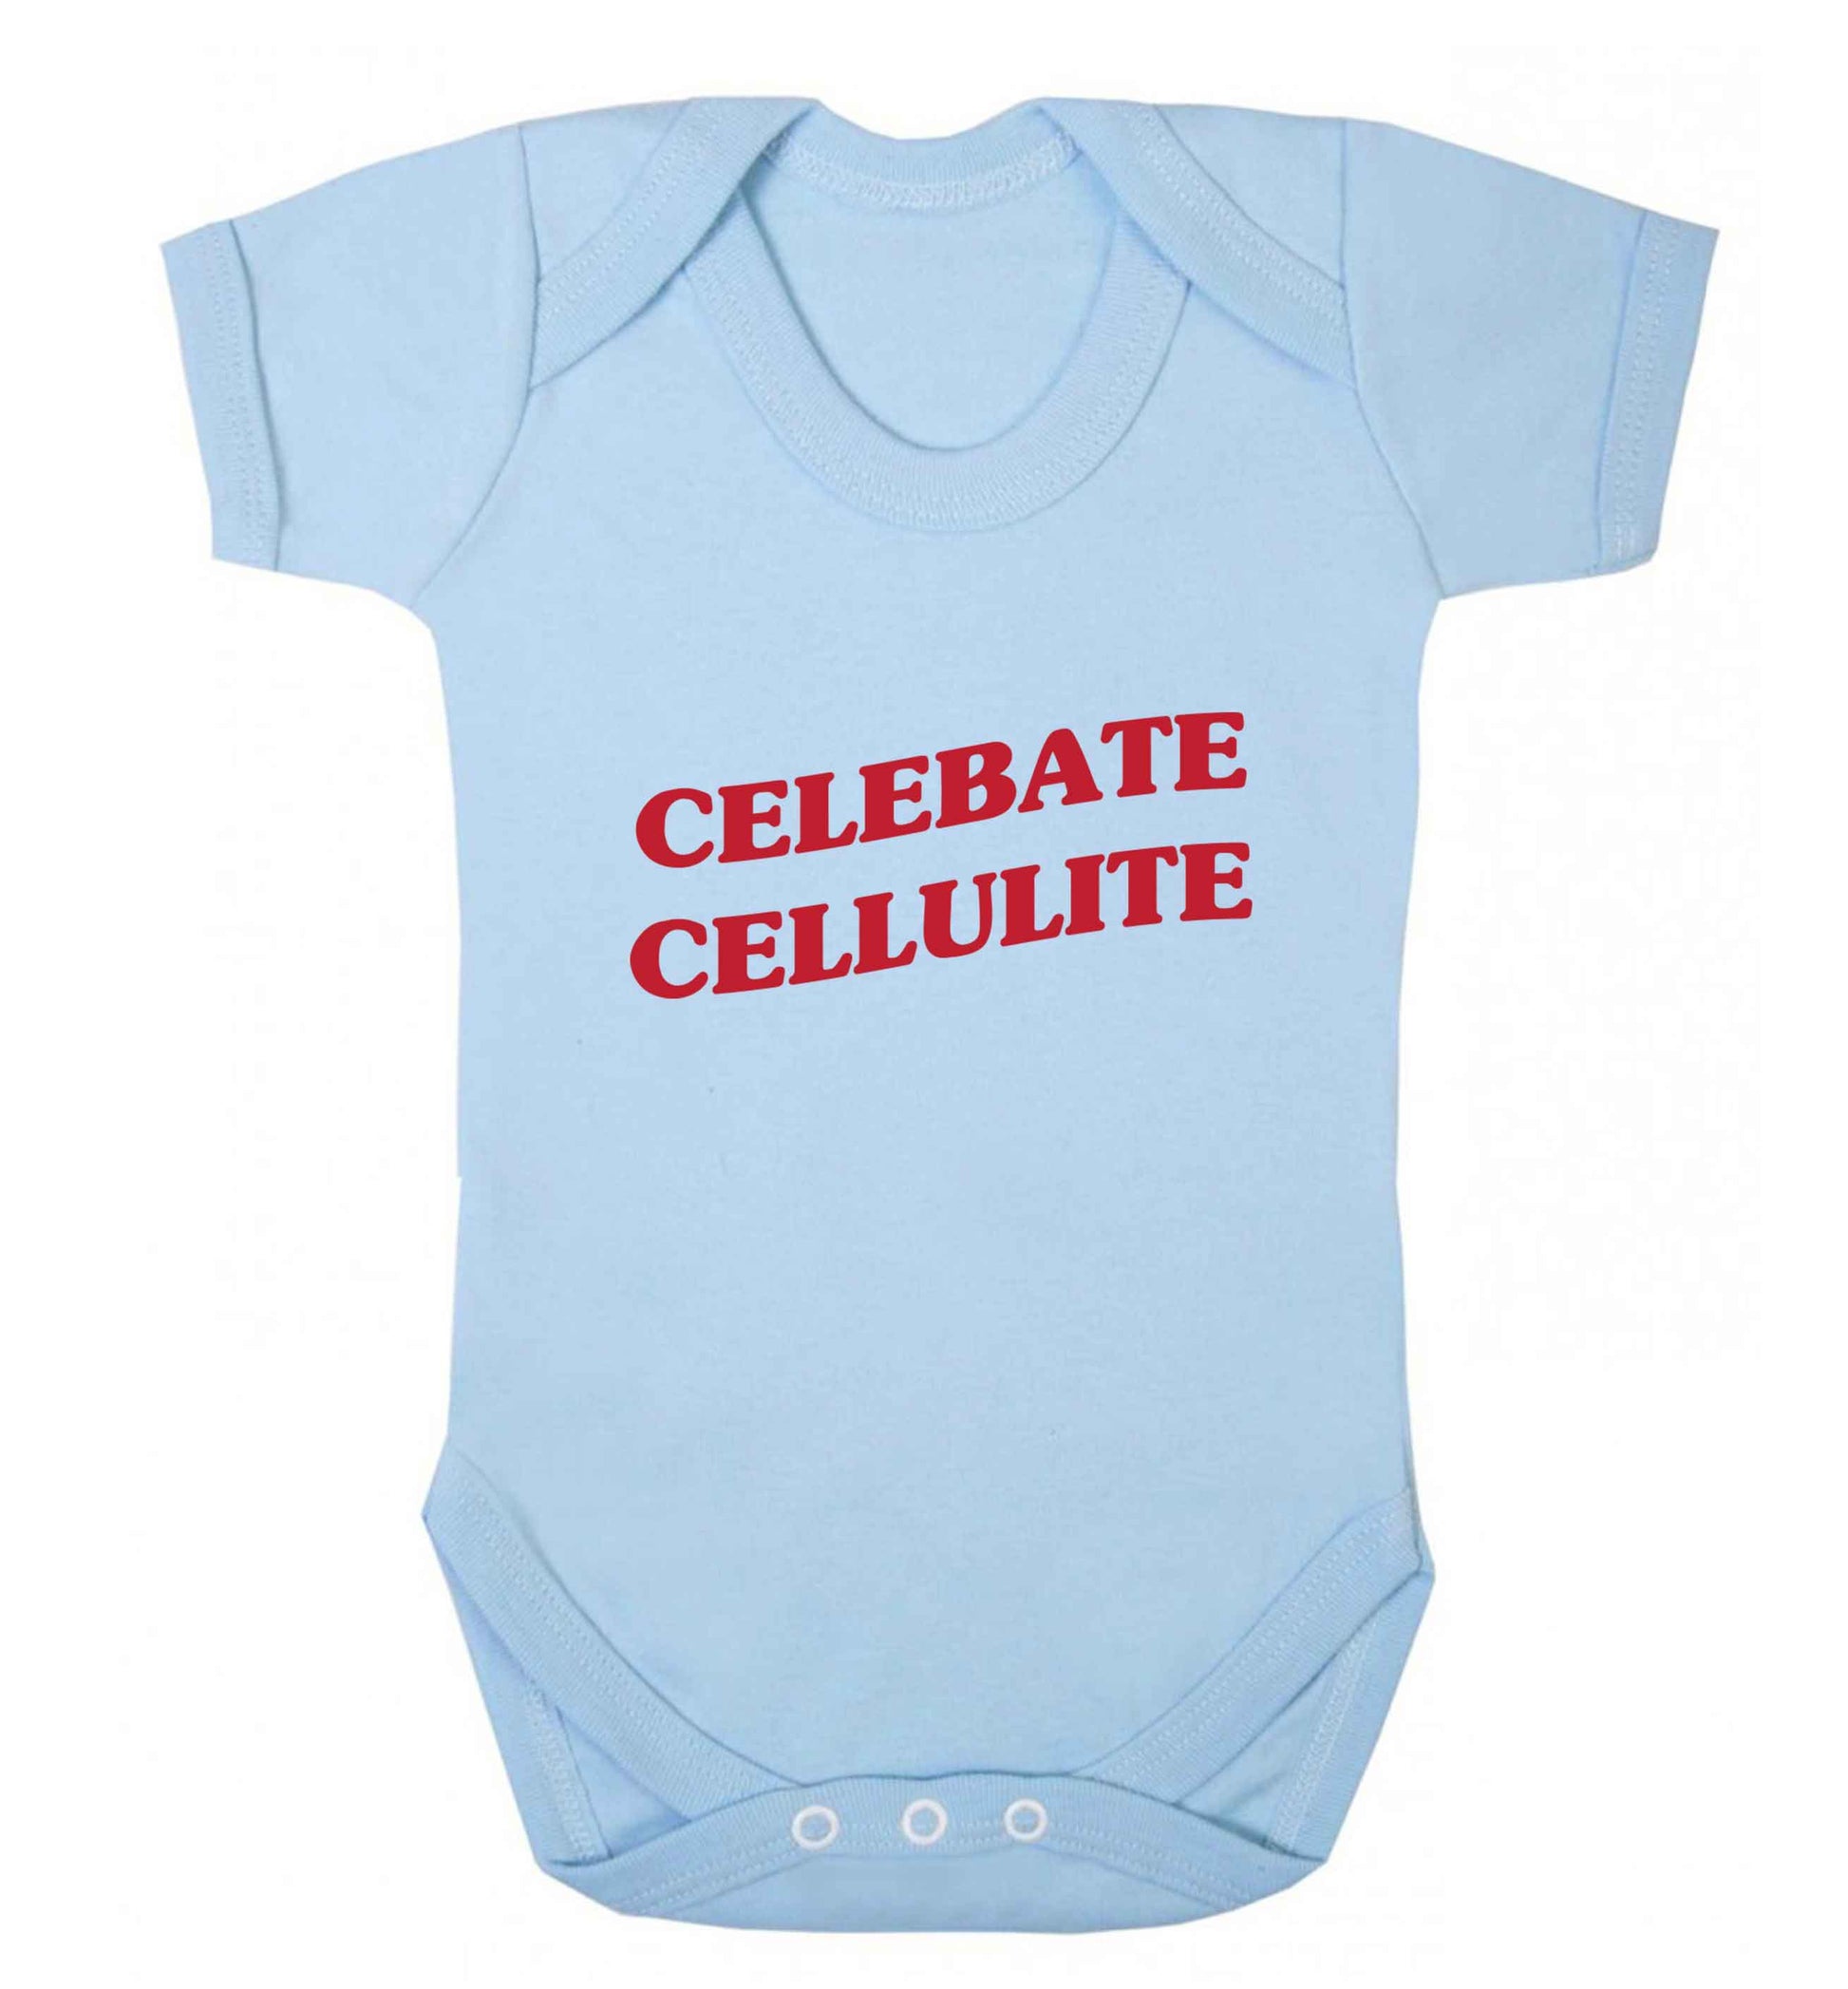 Celebrate cellulite baby vest pale blue 18-24 months